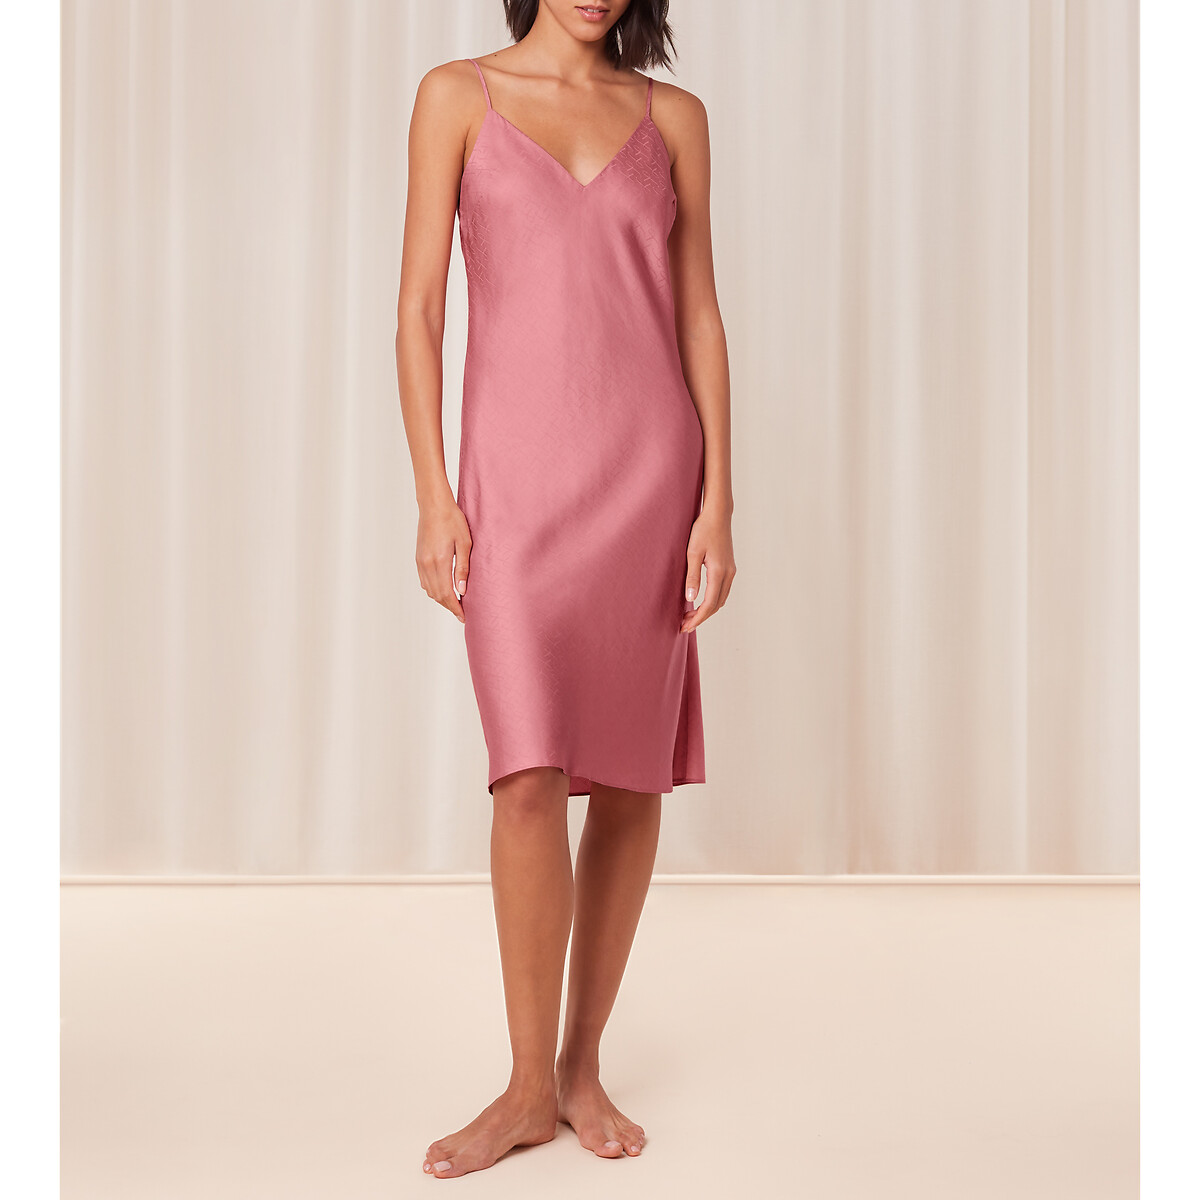 Nachthemd silky sensuality bedruckt | Redoute La Triumph rosa